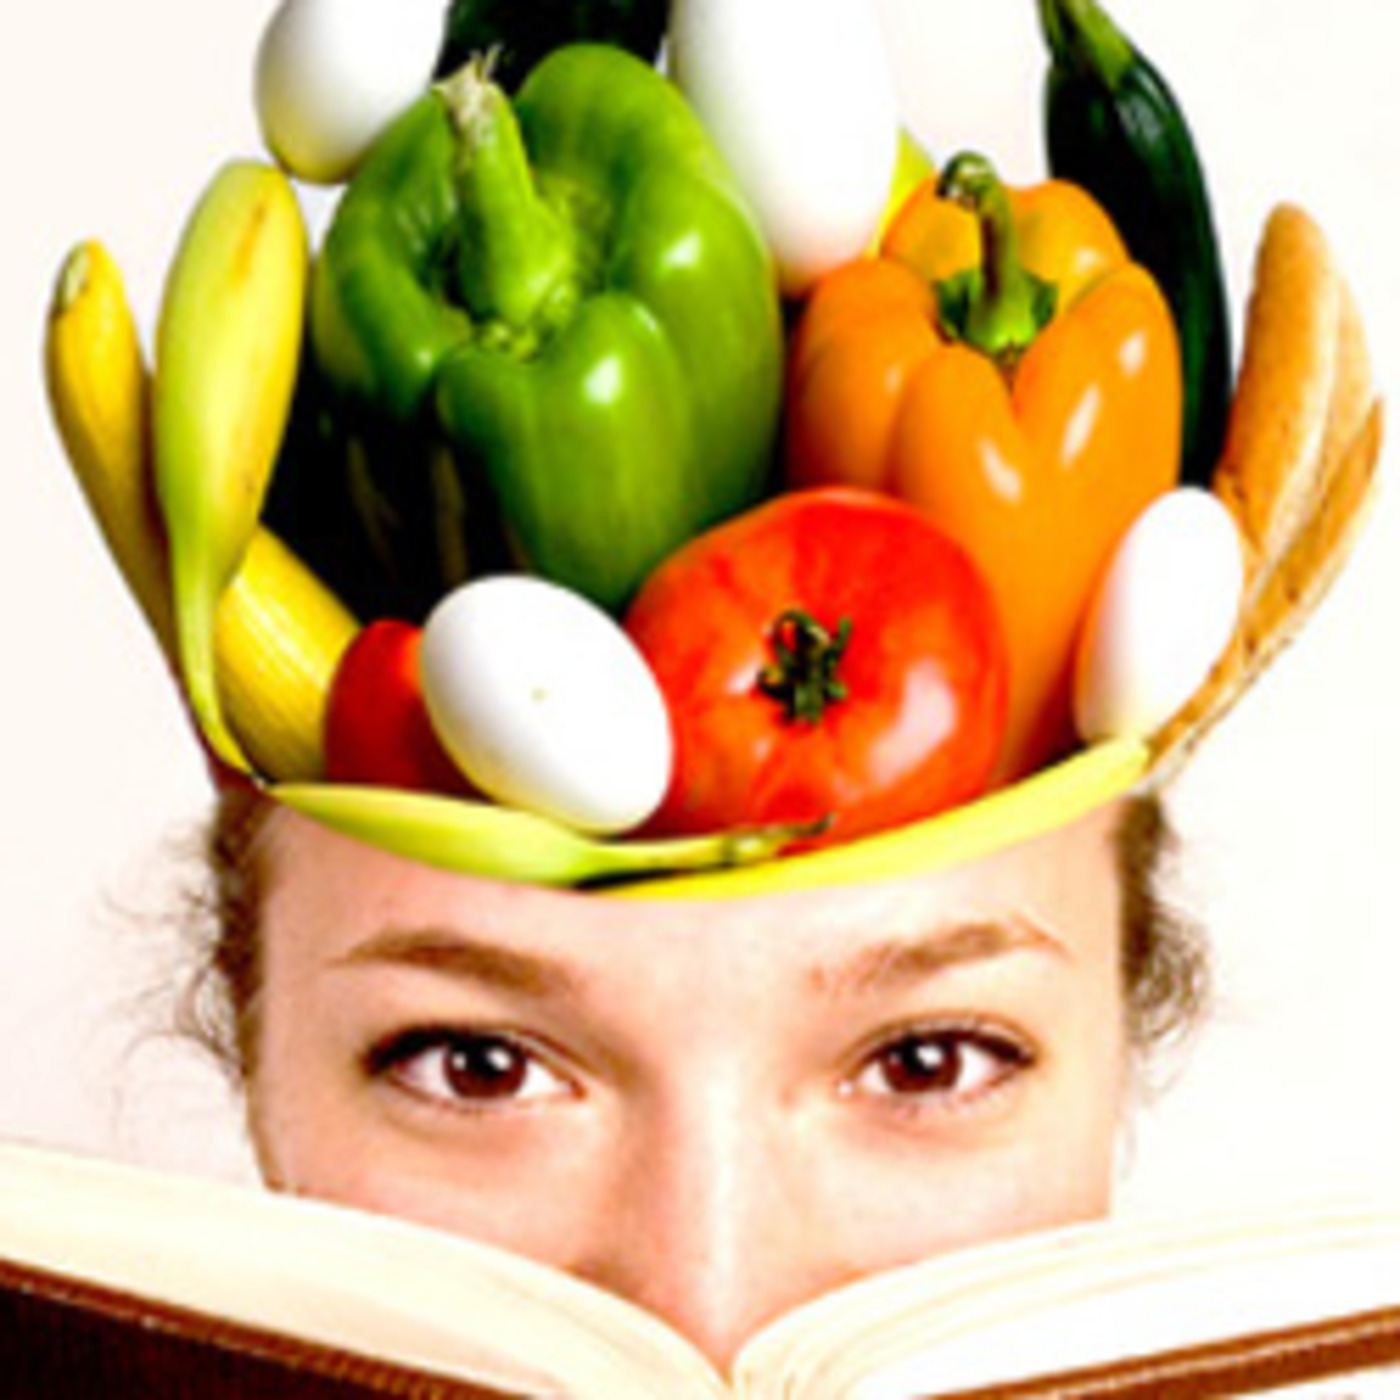 Food and Brain Health